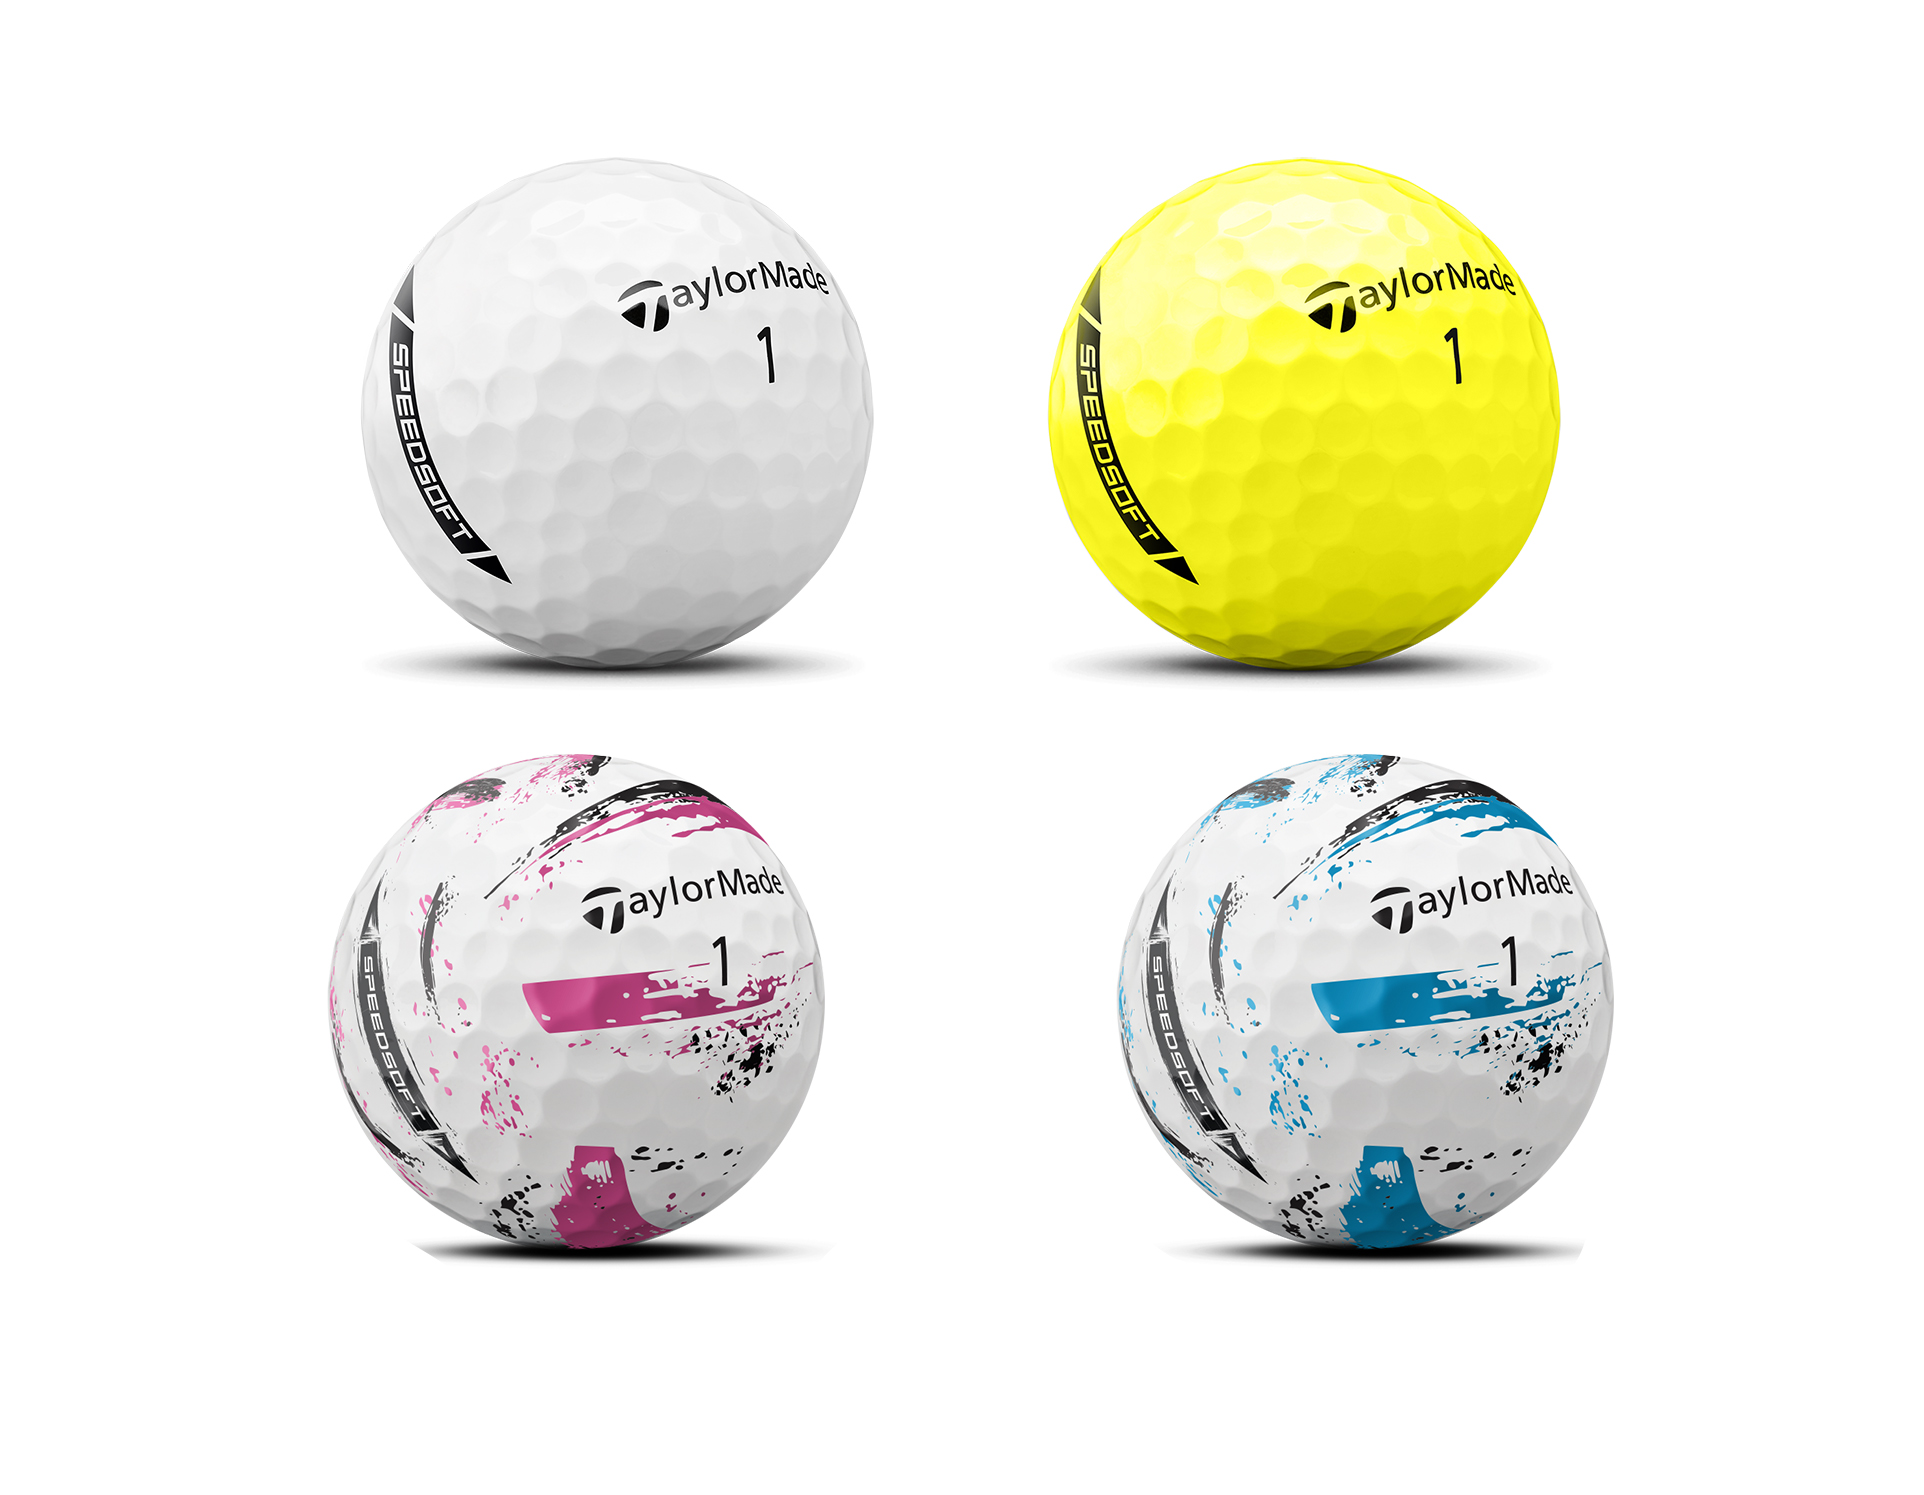 Bridgestone Extra Soft provides soft alternative for golf ball's biggest  market segment, Golf Equipment: Clubs, Balls, Bags